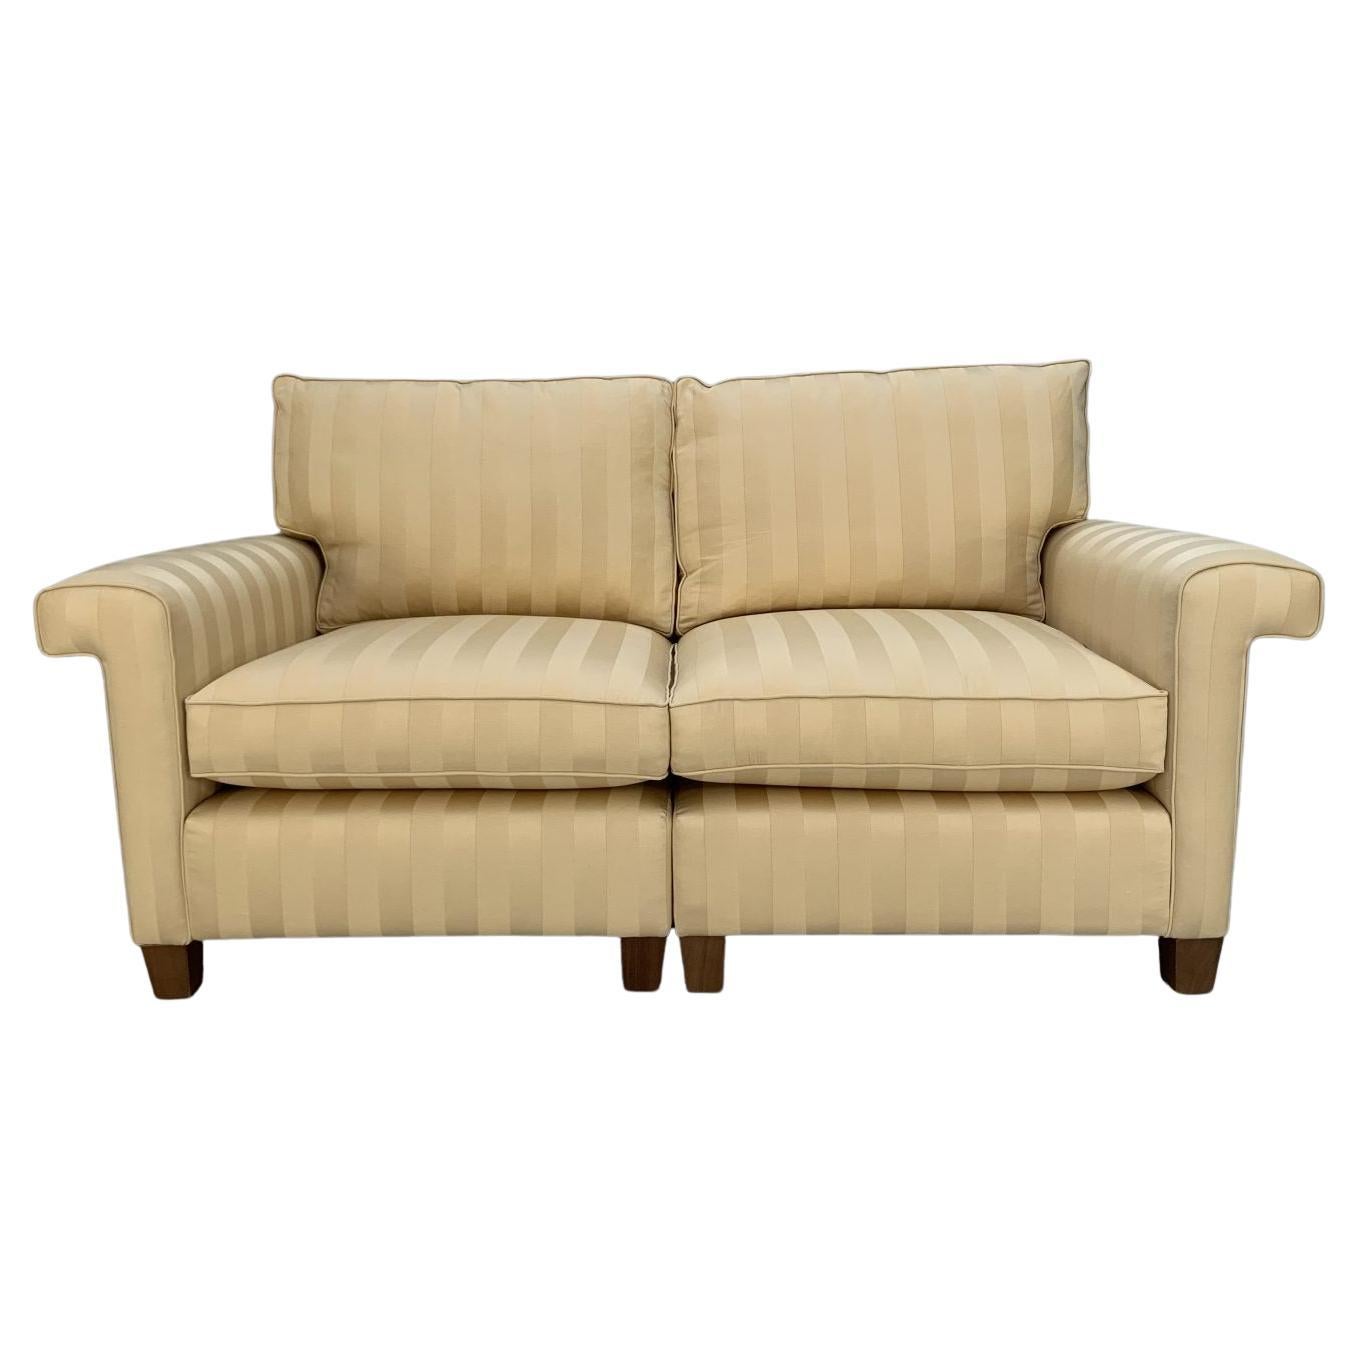 Duresta “Gabrielle” 2.5-Seat Sofa – In Gold Stripe Fabric For Sale